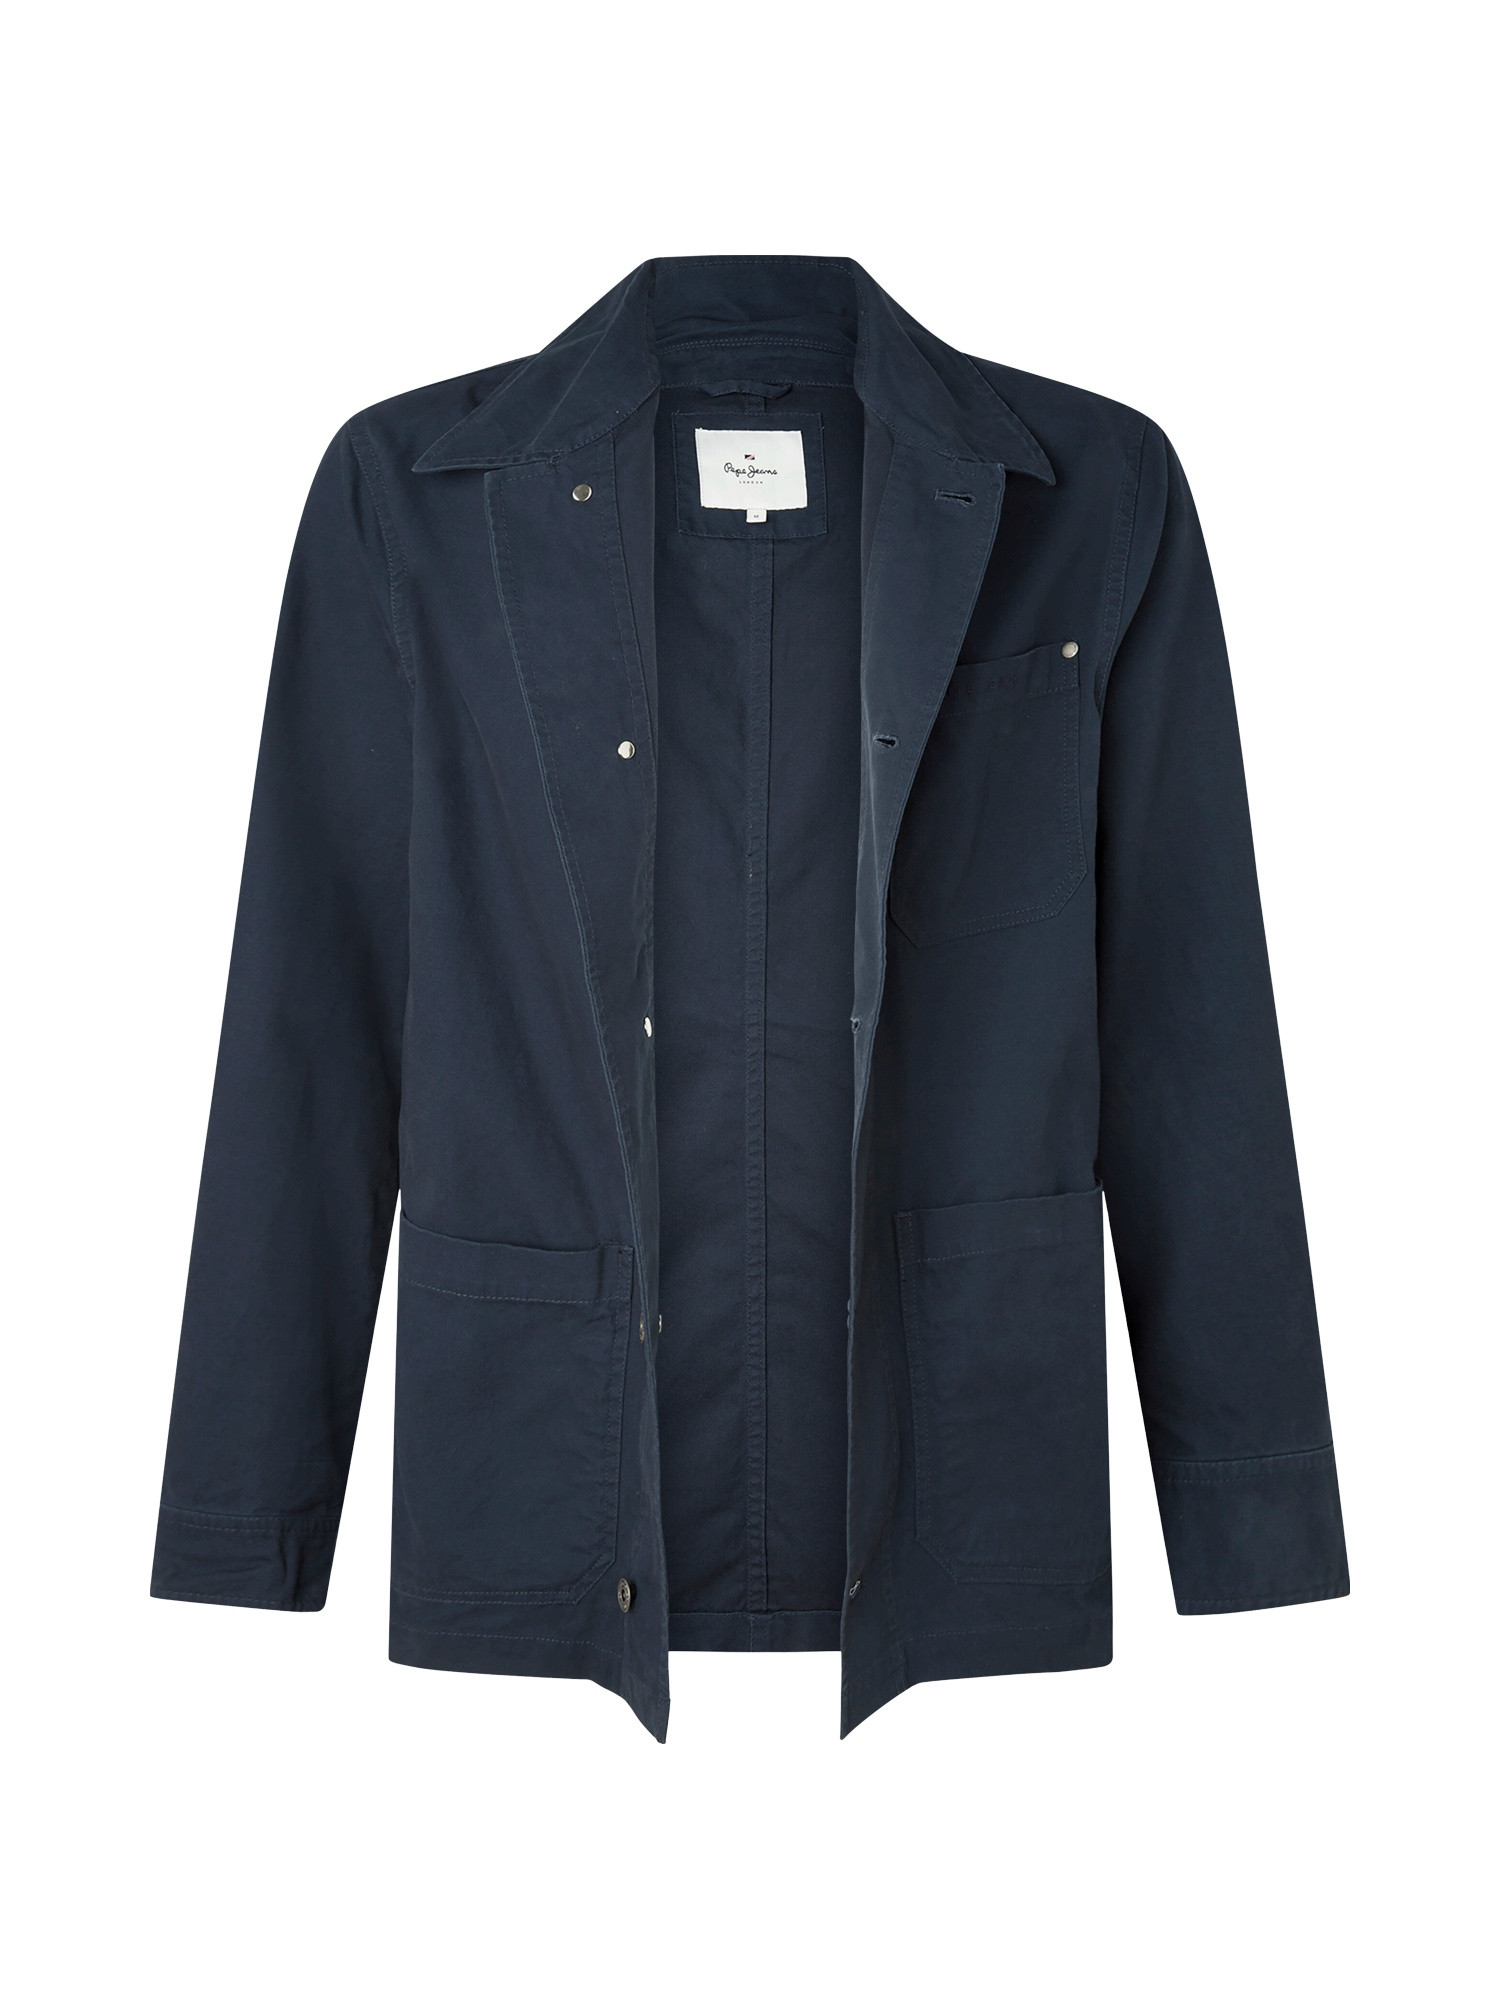 Pepe Jeans - Cotton jacket, Dark Blue, large image number 2